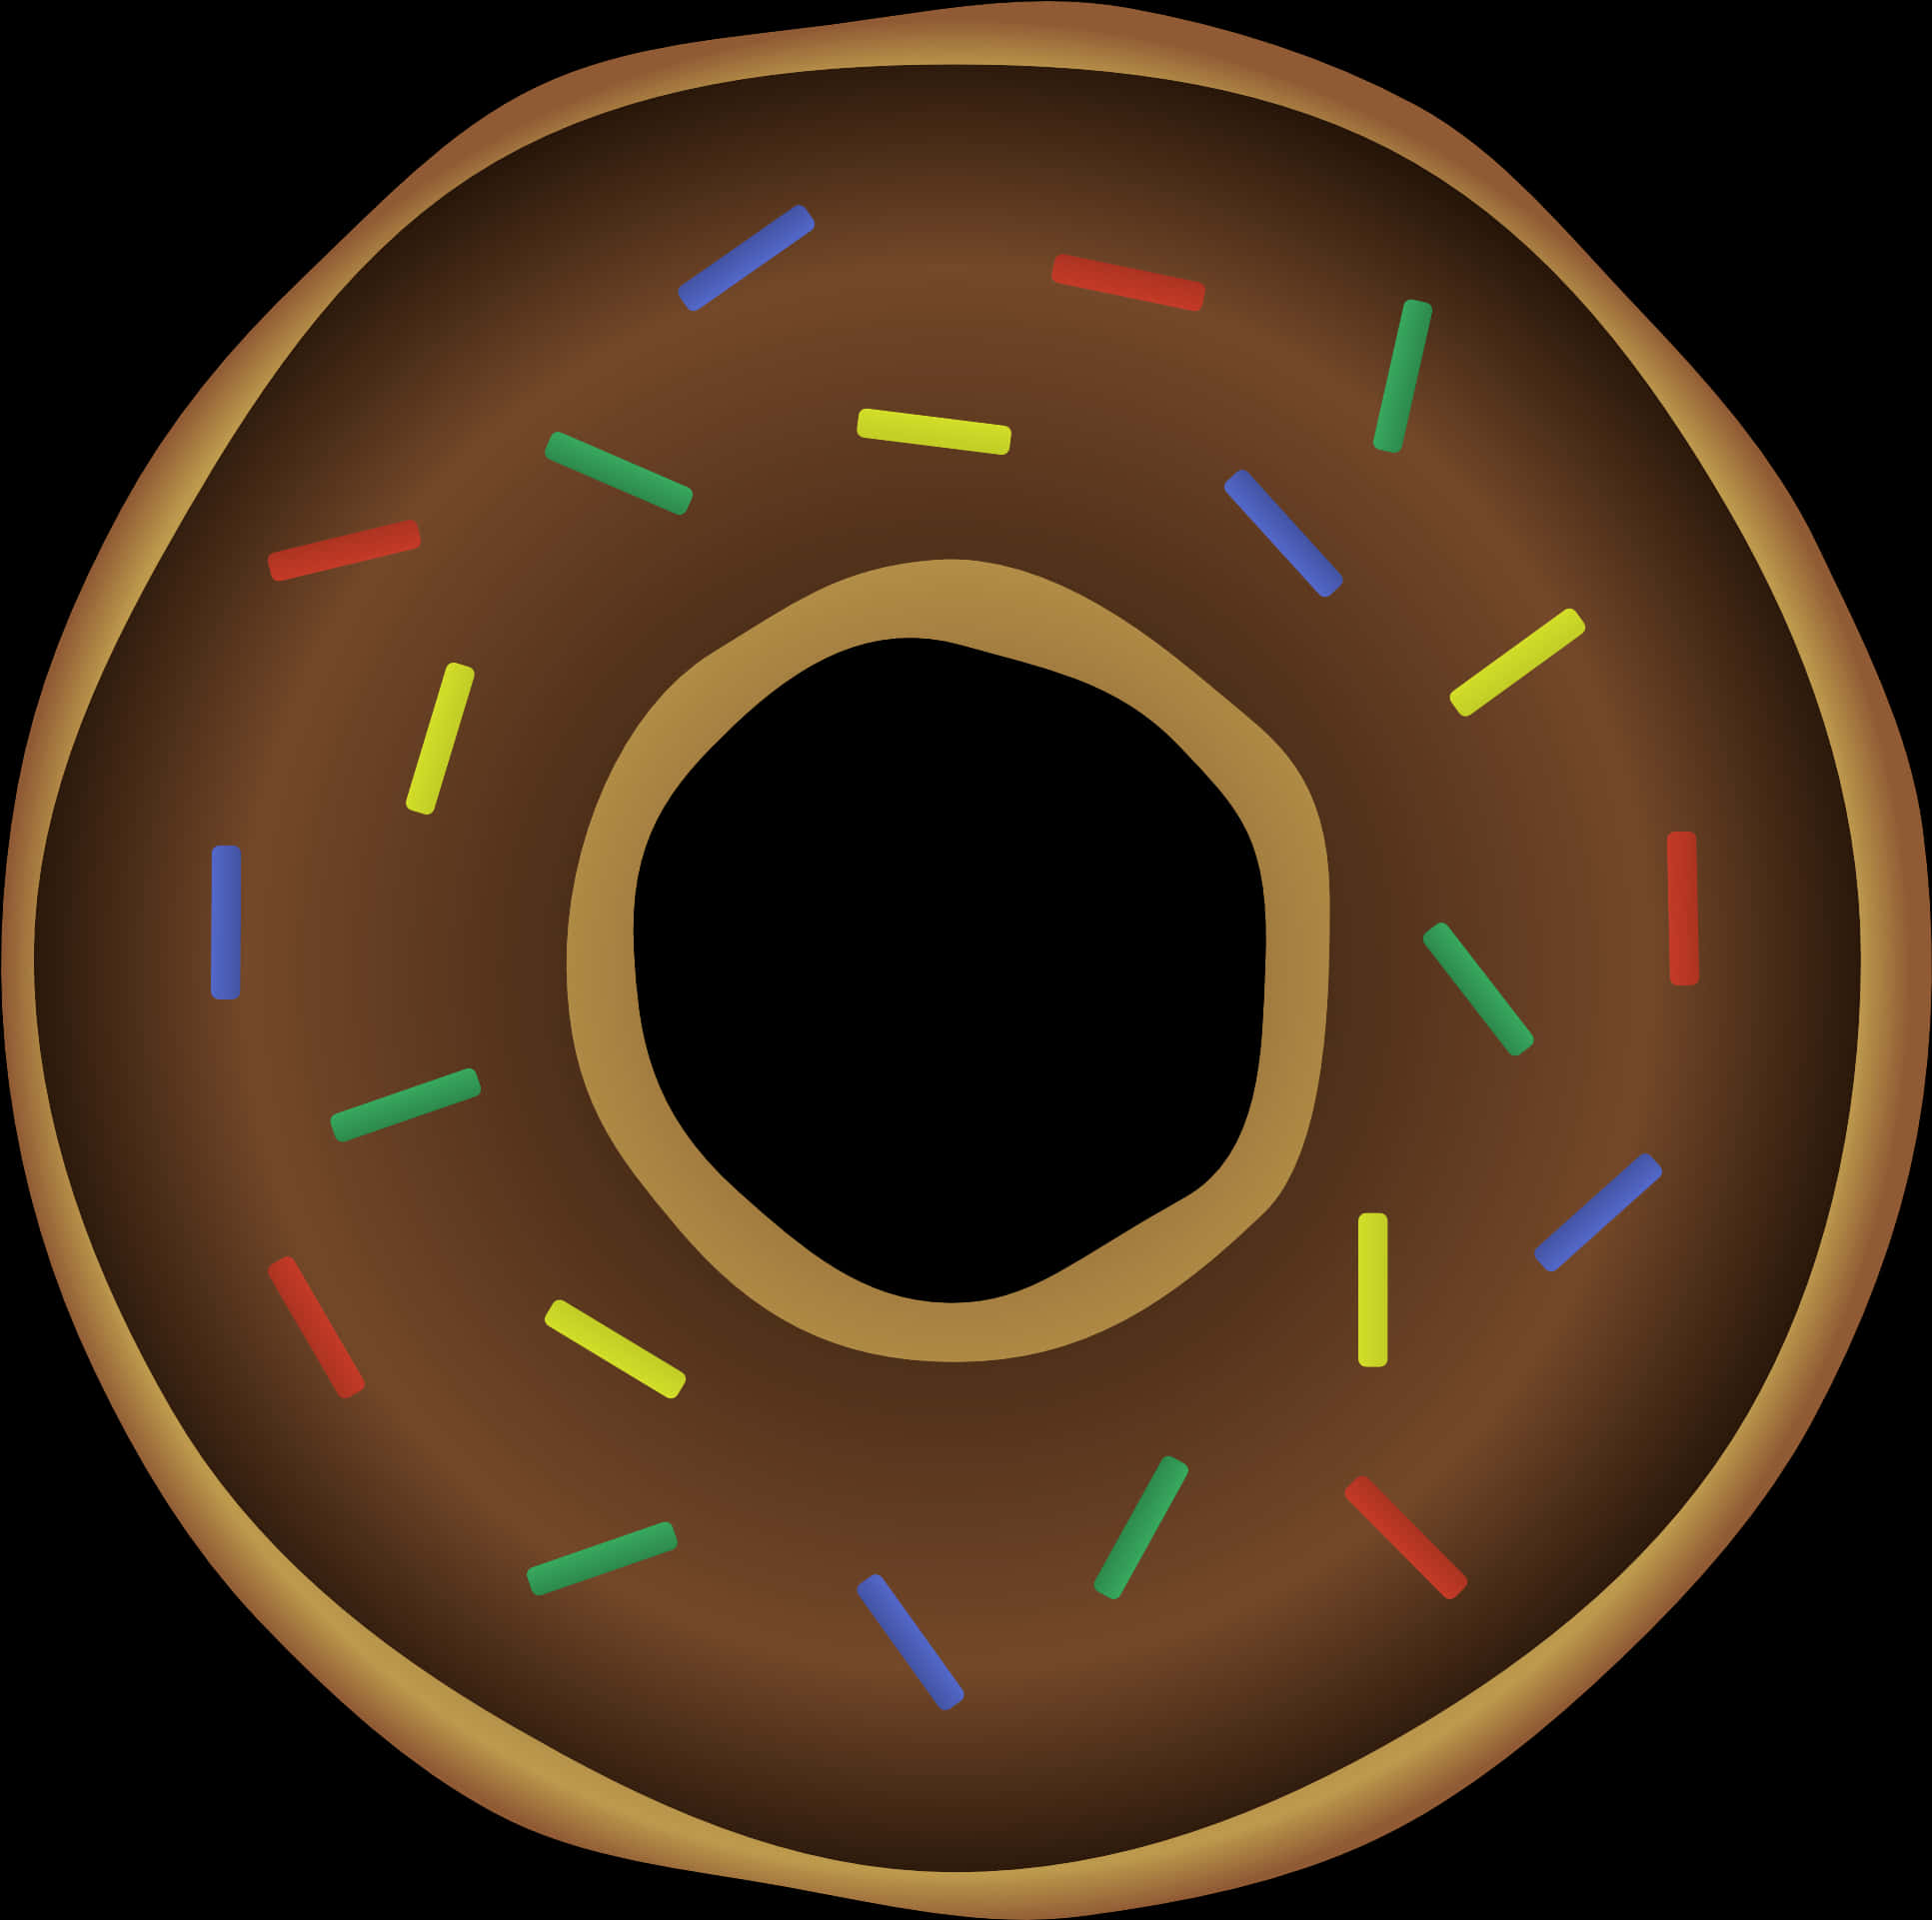 Chocolate Sprinkled Donut Illustration